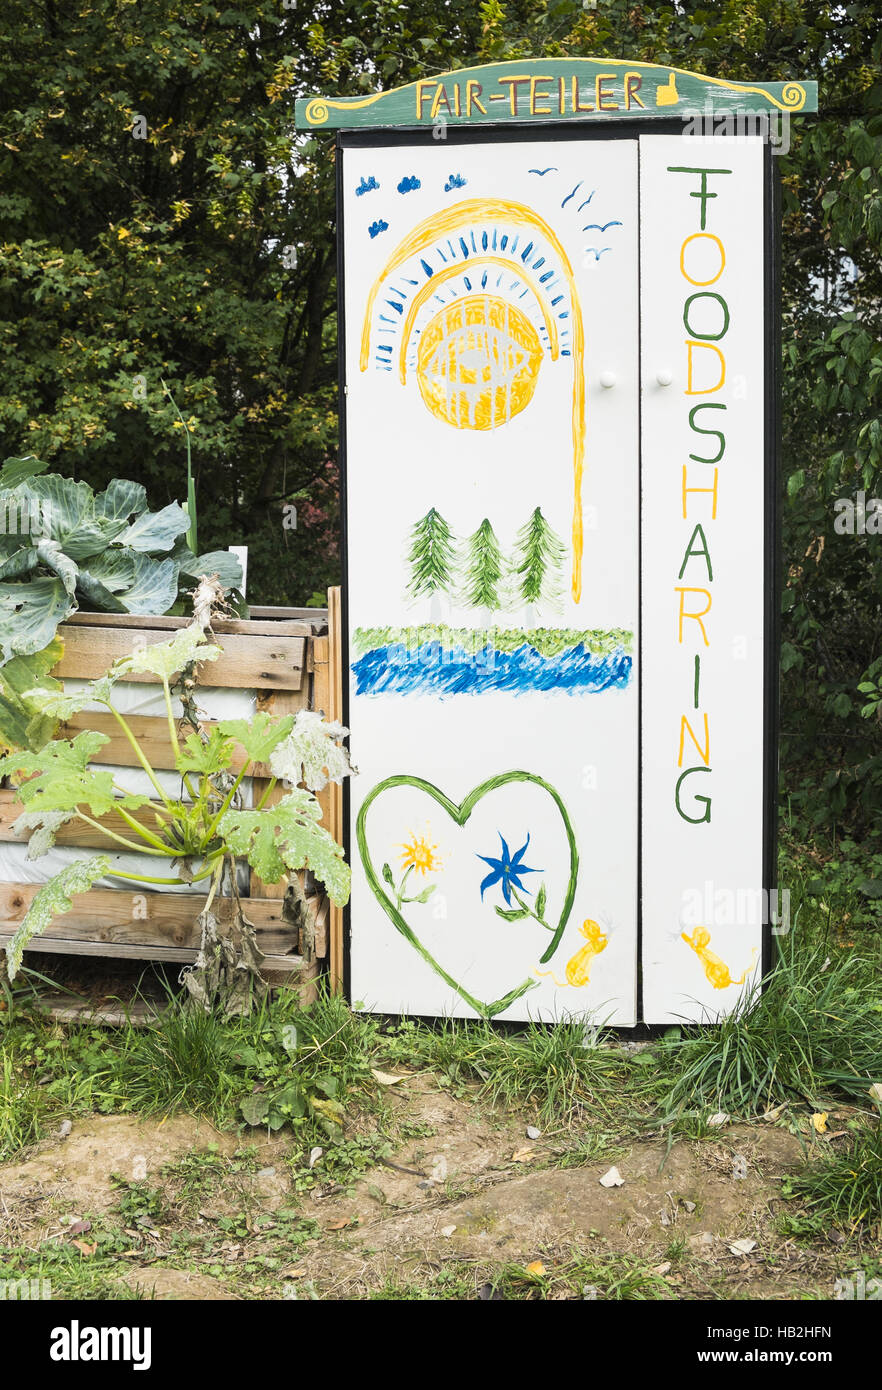 food sharing, urban gardening project Stock Photo